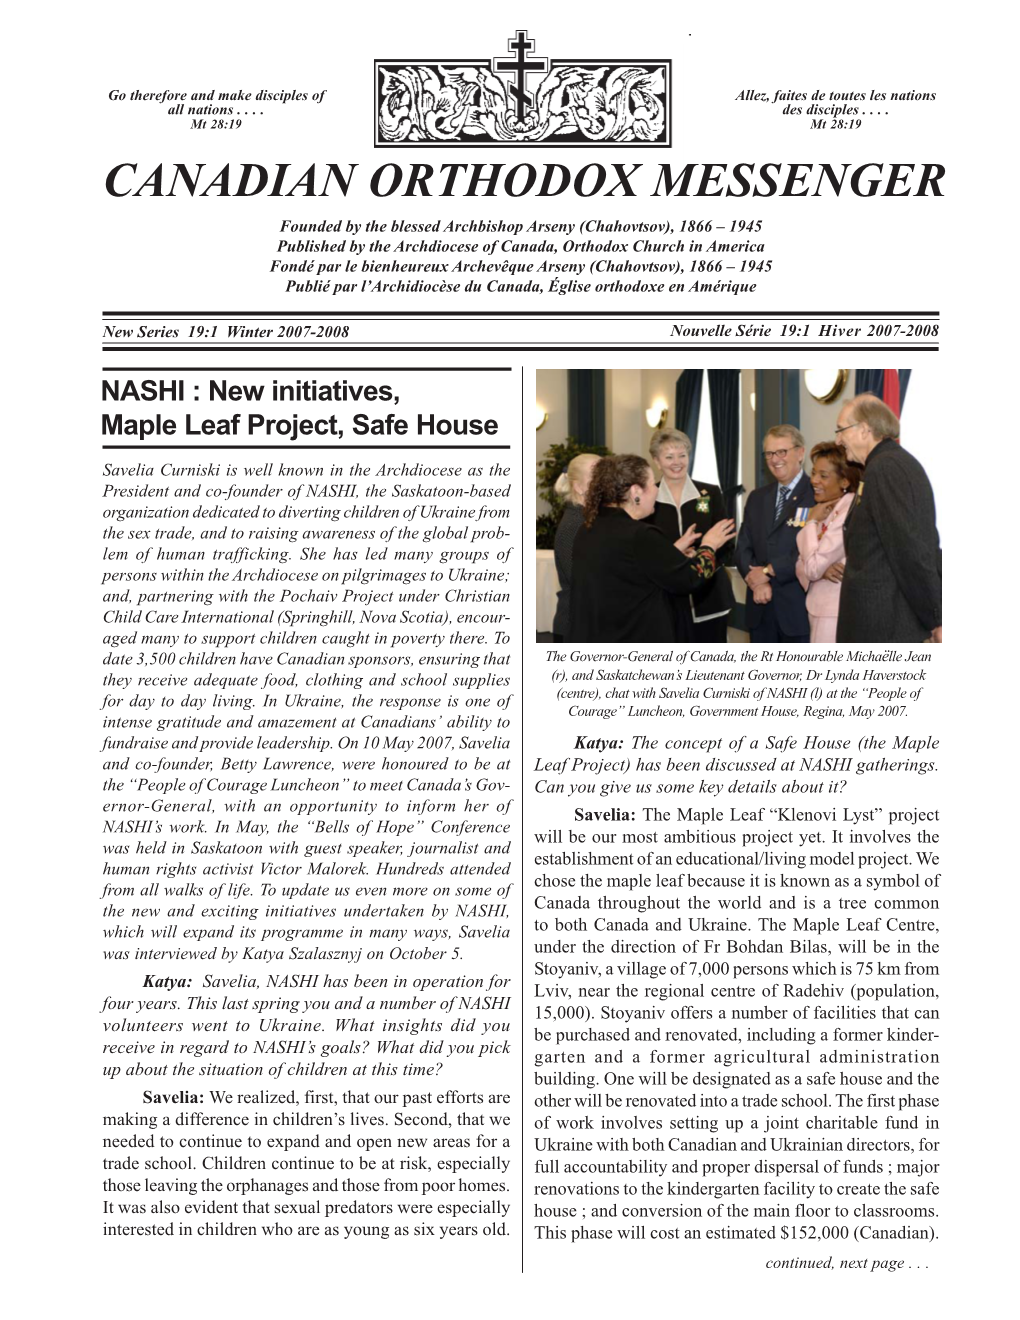 Canadian Orthodox Messenger